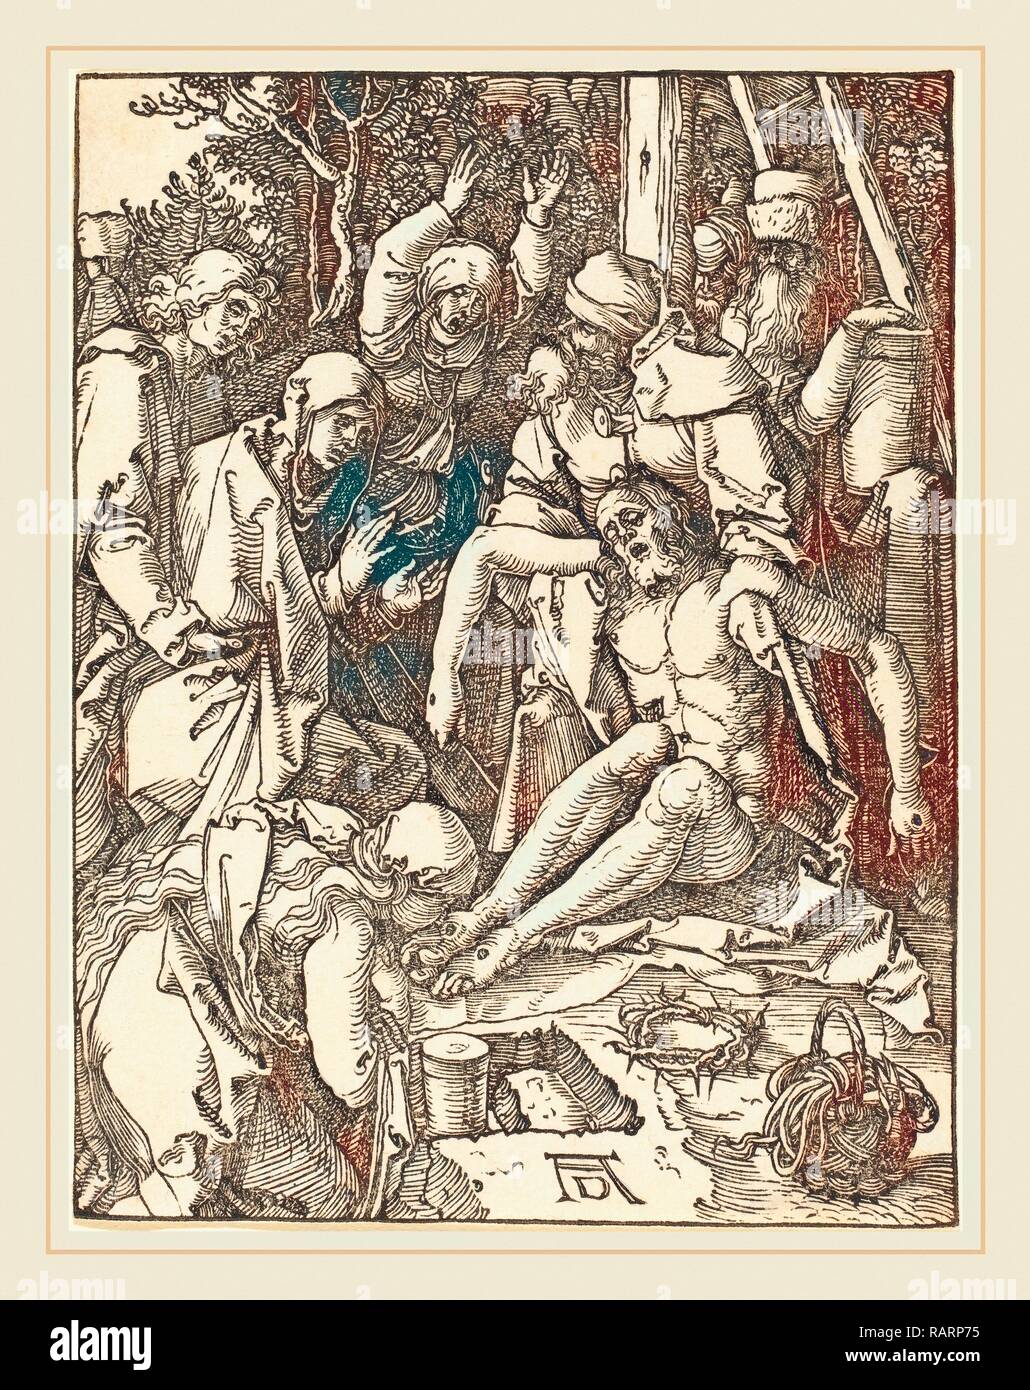 Albrecht Dürer (German, 1471-1528), The Lamentation, probably c. 1509-1510, woodcut. Reimagined by Gibon. Classic art reimagined Stock Photo